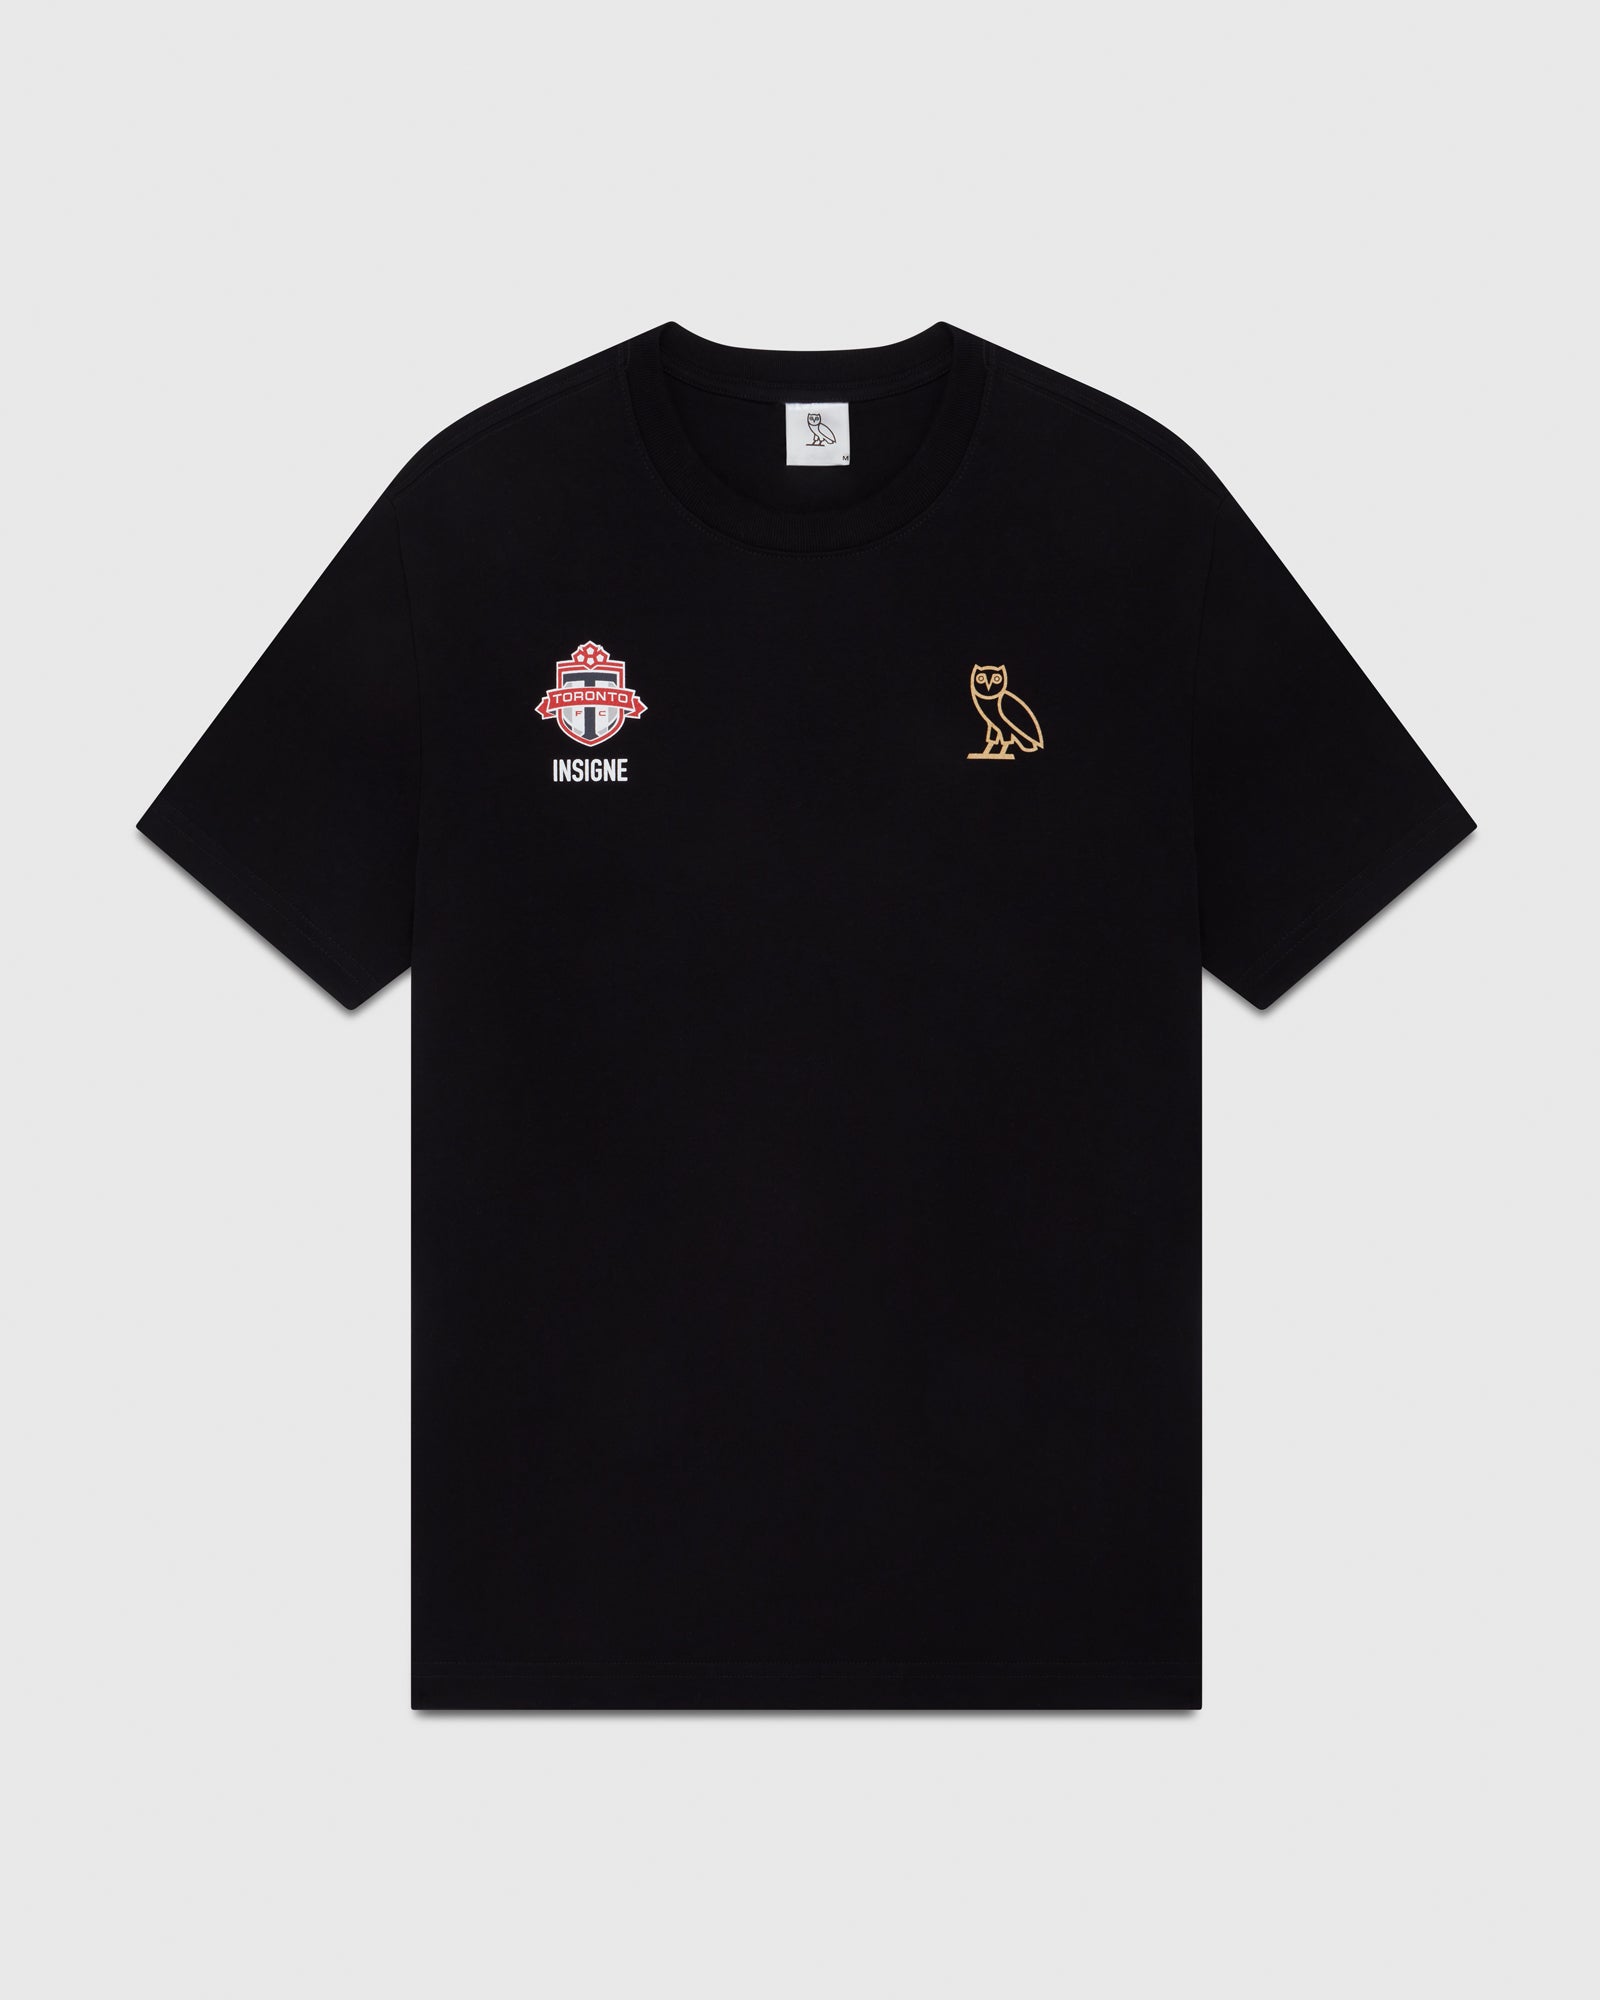 OVO X Toronto FC IL MAGNIFICO T-Shirt